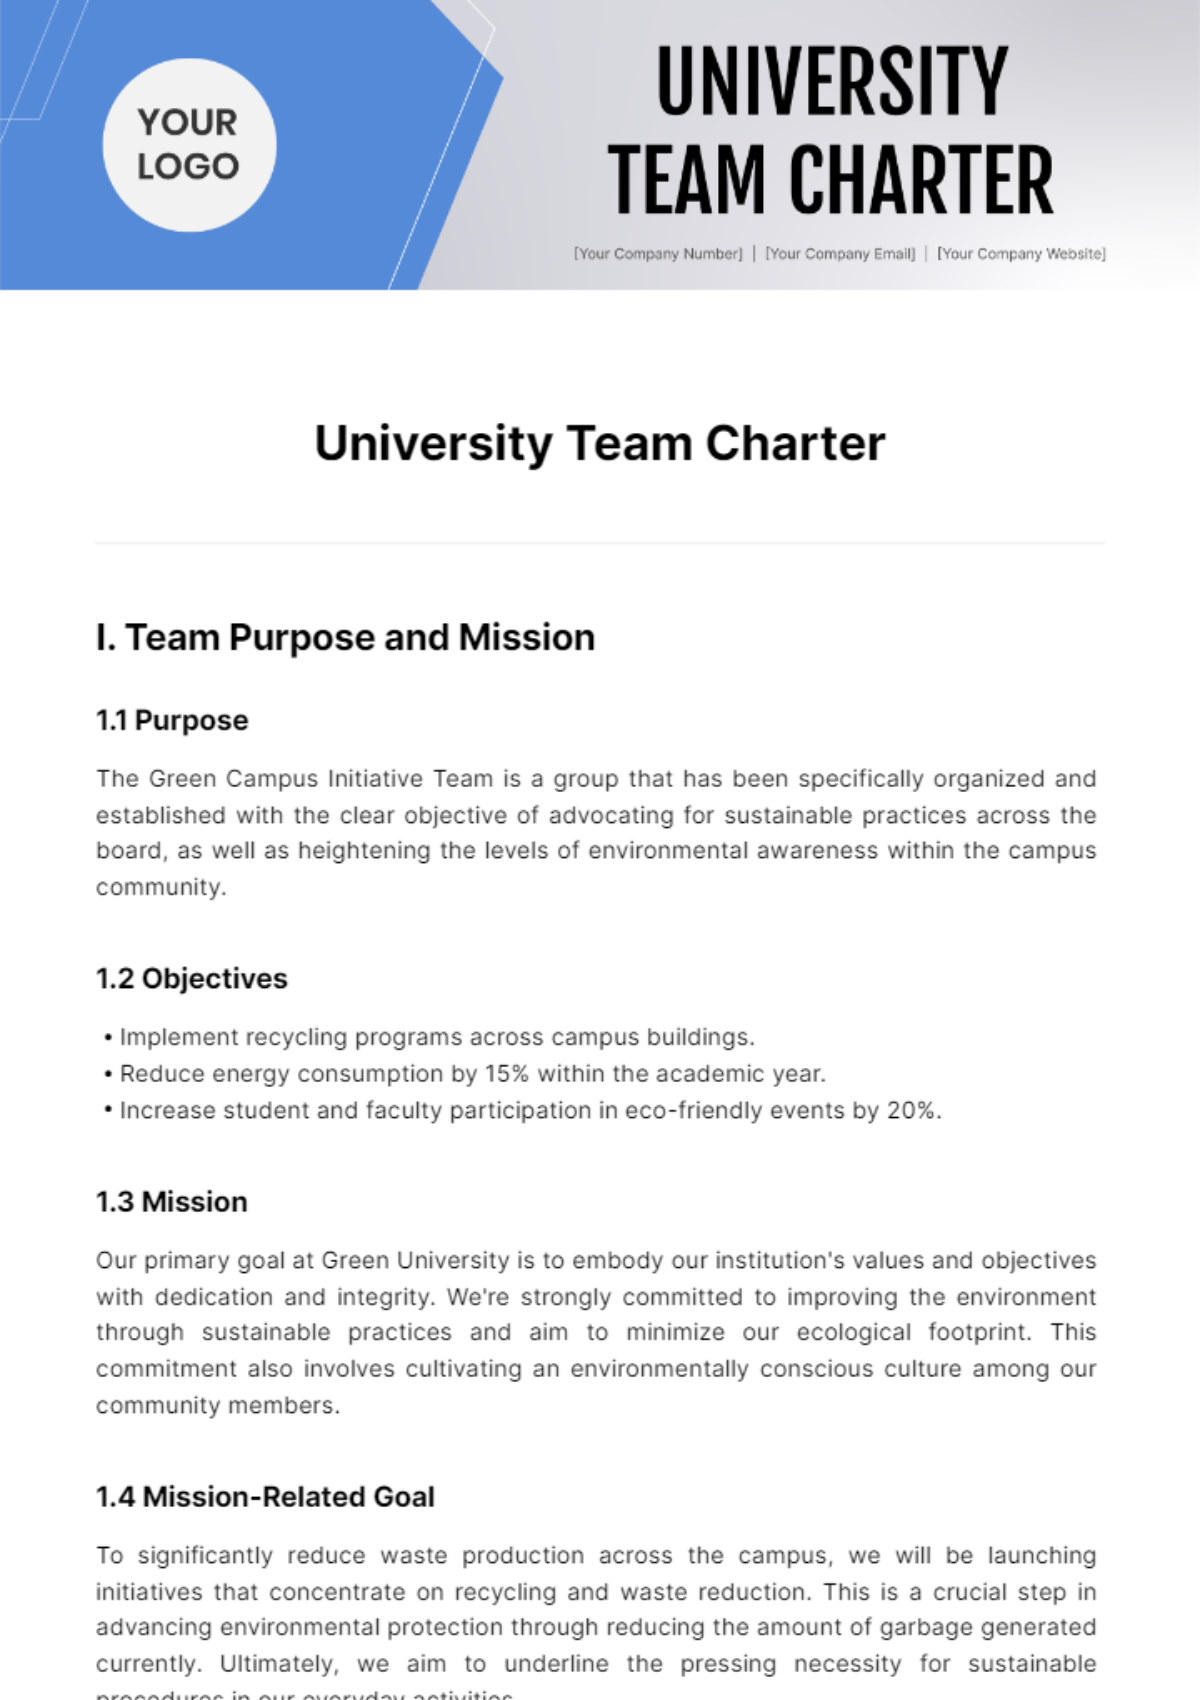 University Team Charter Template